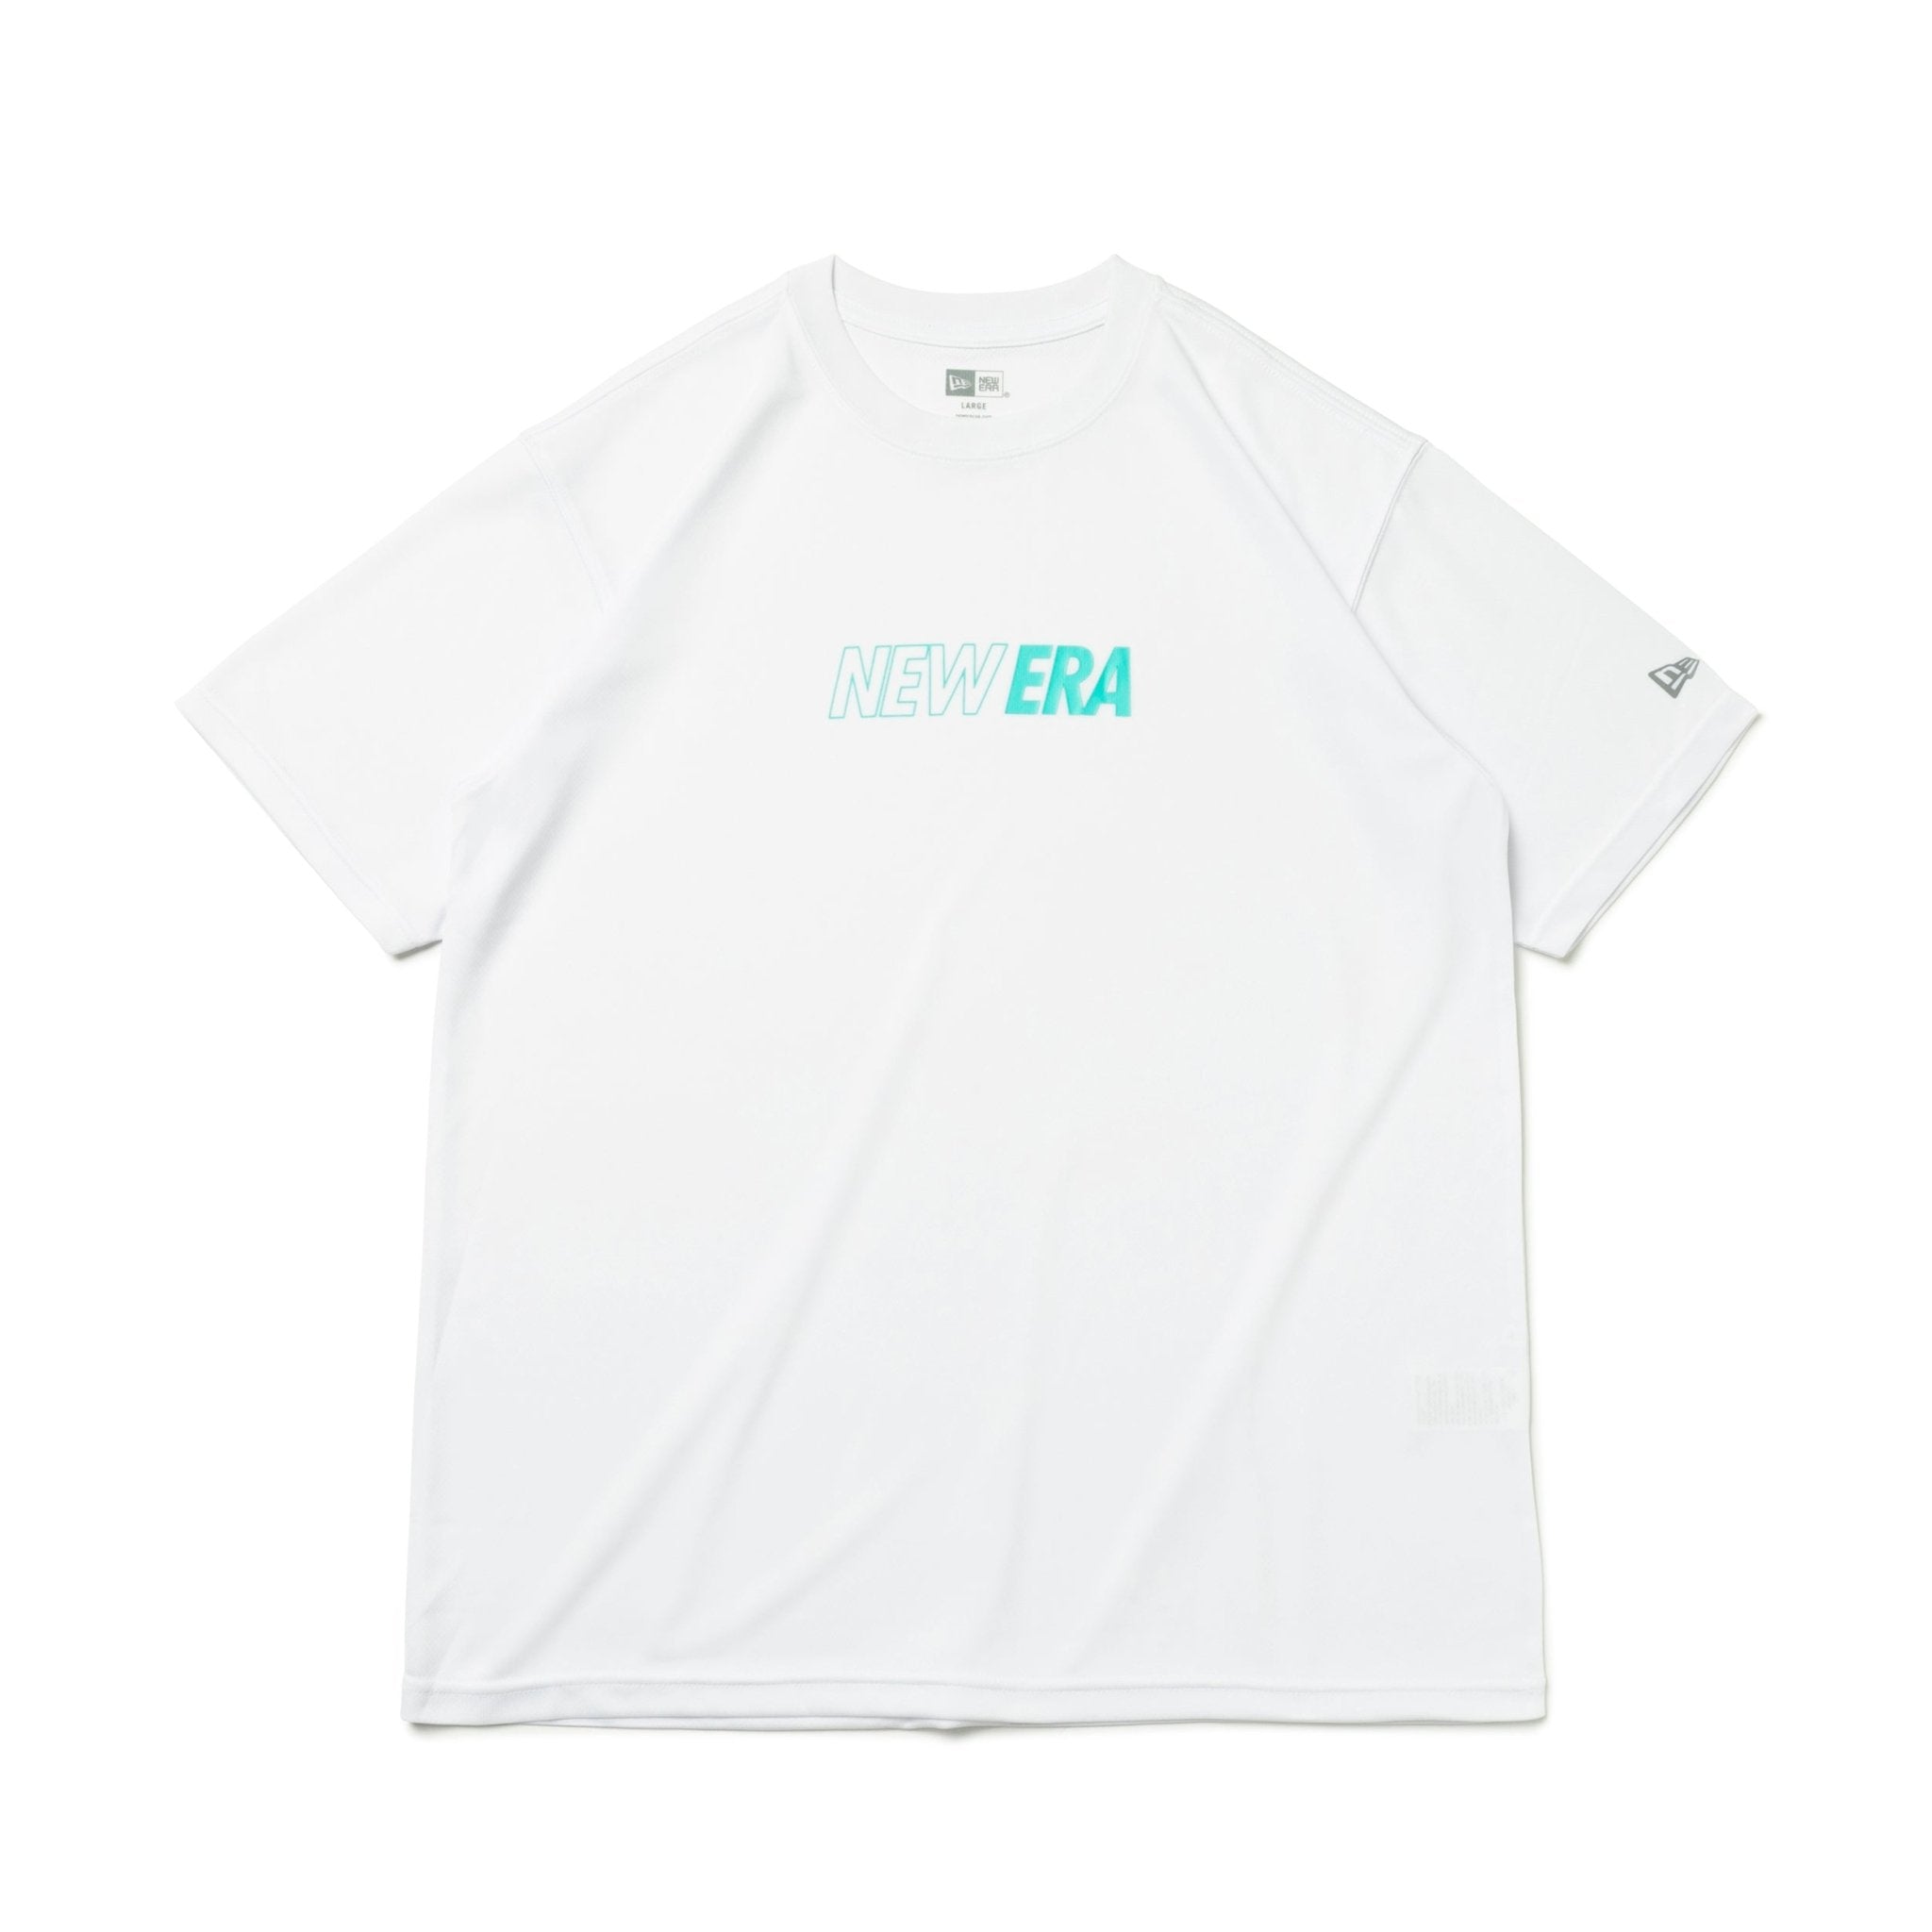 Shop New Era T-Shirts (13527203, 13527202, 13527201, 13527200) by  Shabondama